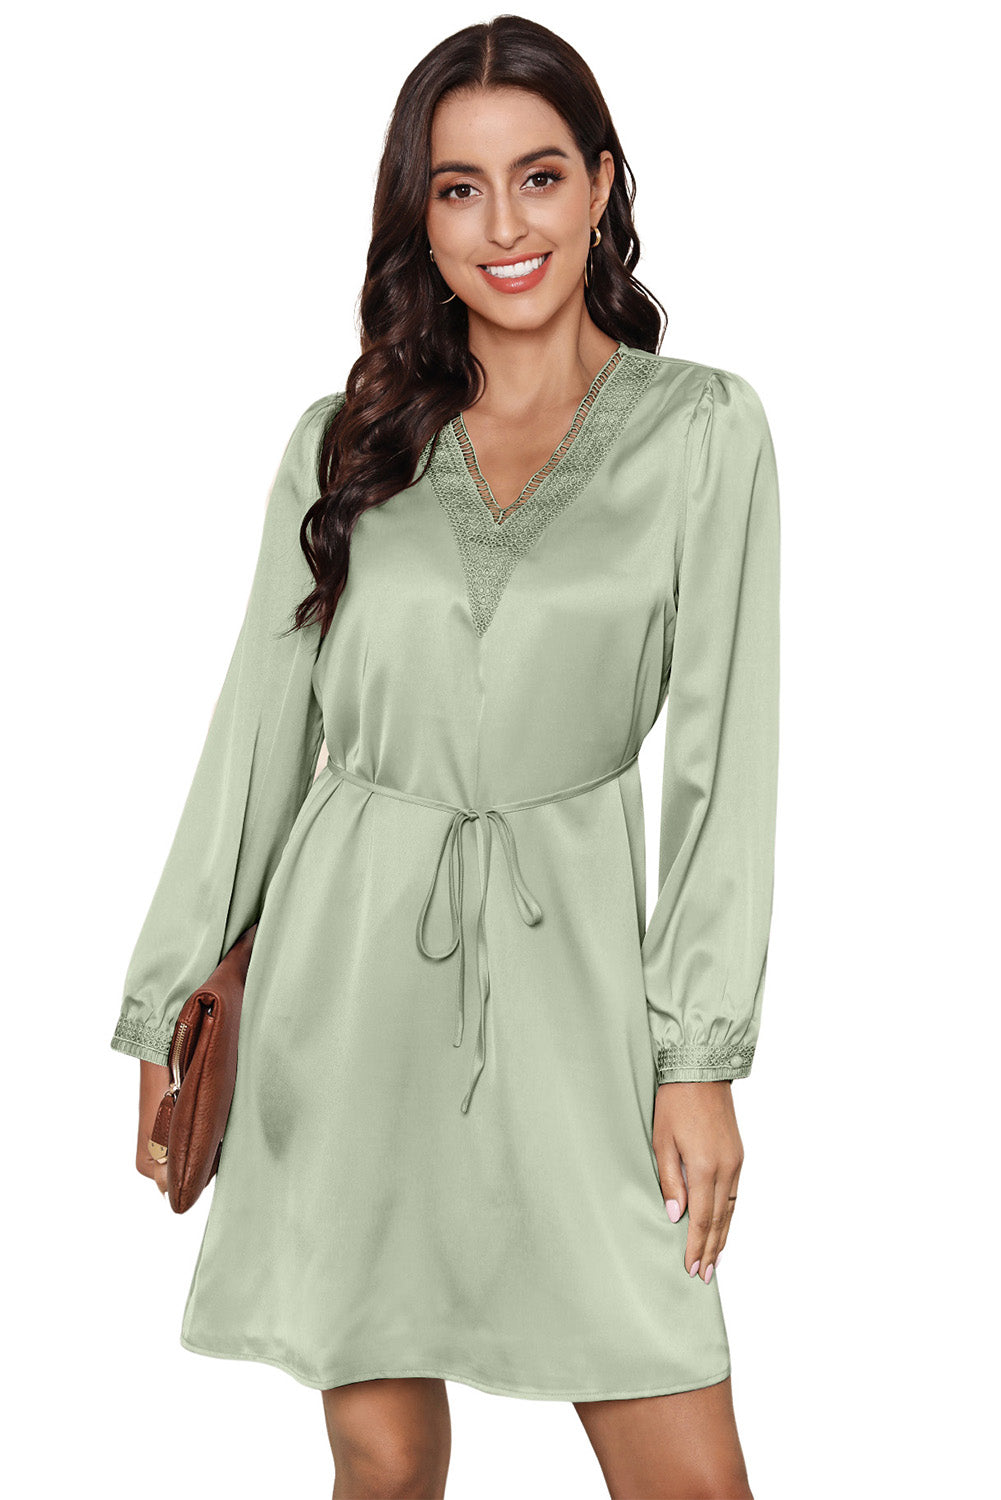 Green Lace Trim V Neck Tie Waist Long Sleeve Dress Mini Dresses JT's Designer Fashion